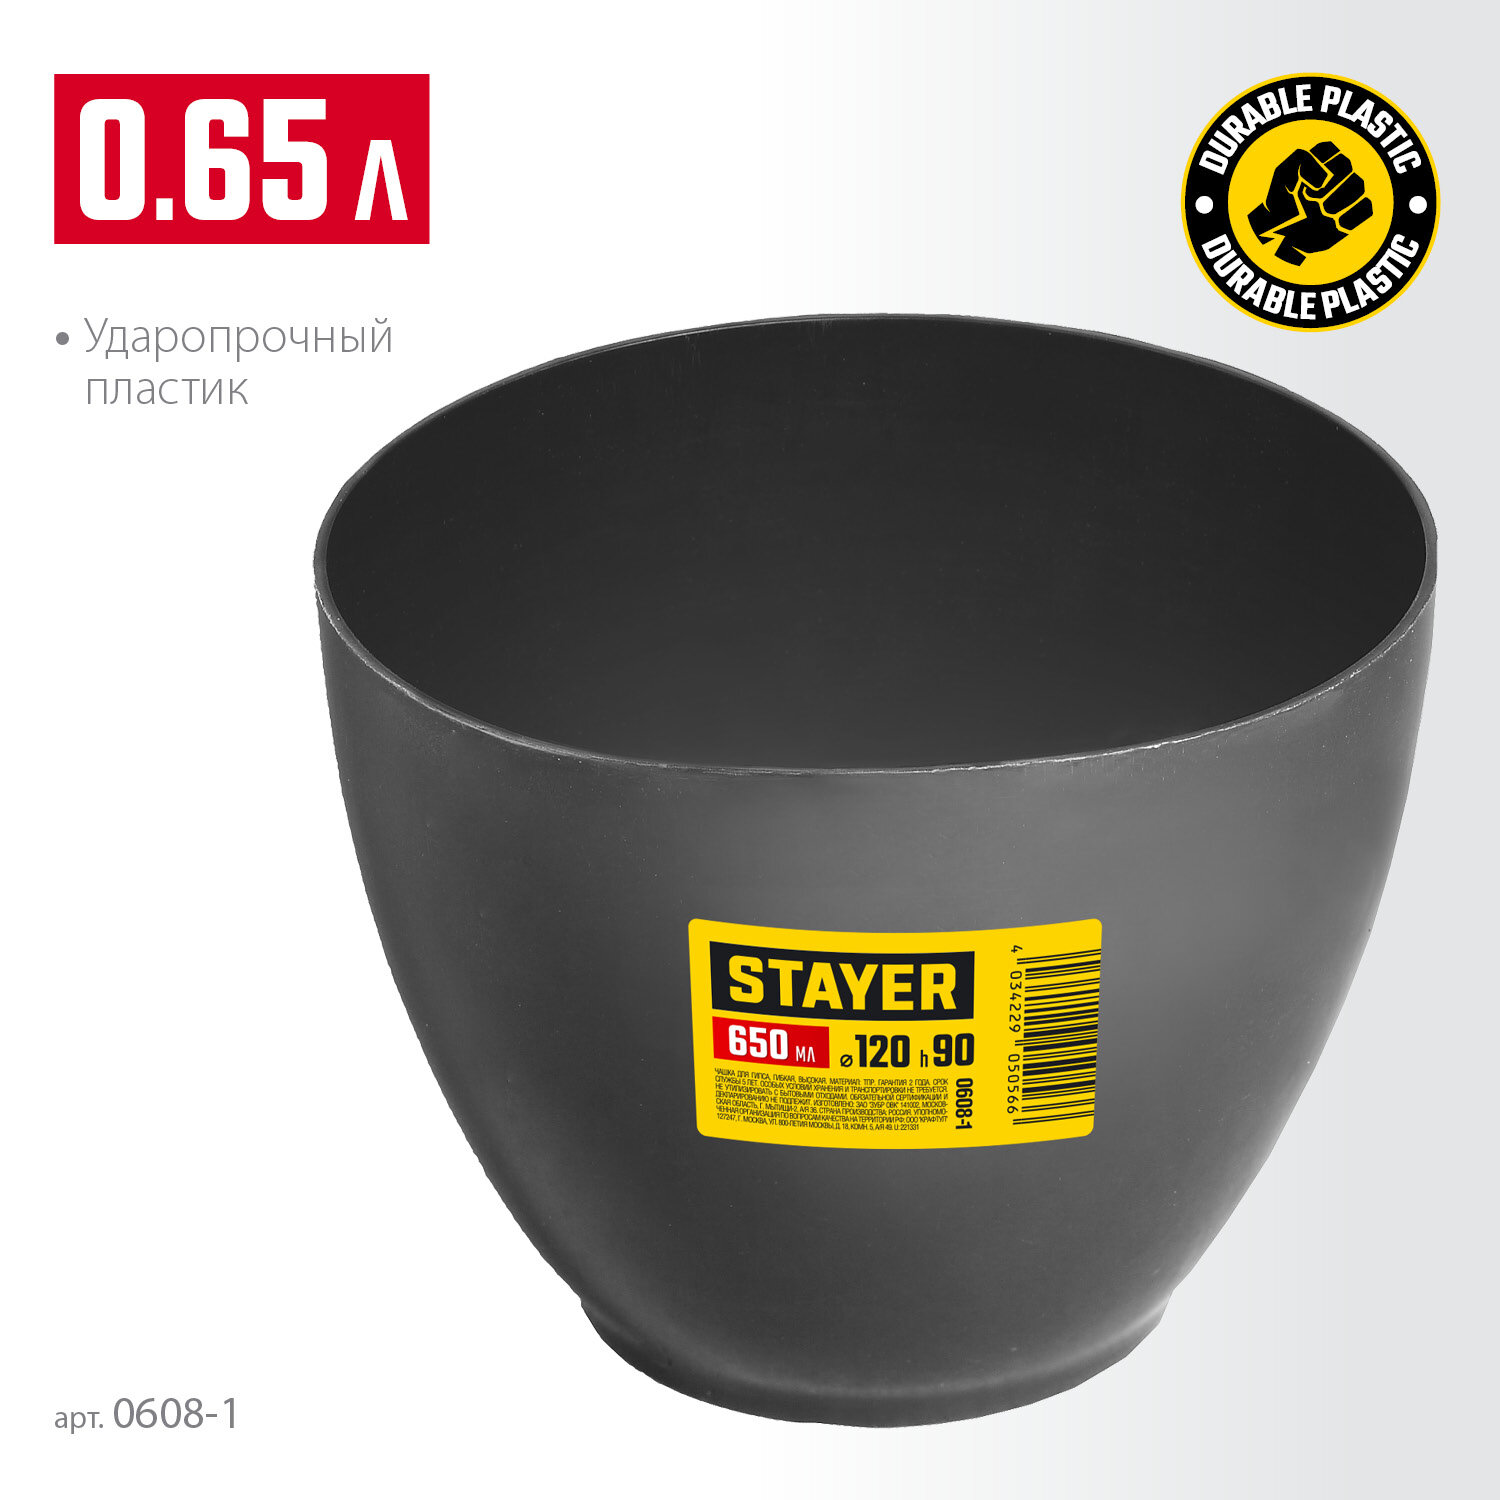 STAYER d120 х 90 Высокая чашка для гипса MASTER (0608-1)